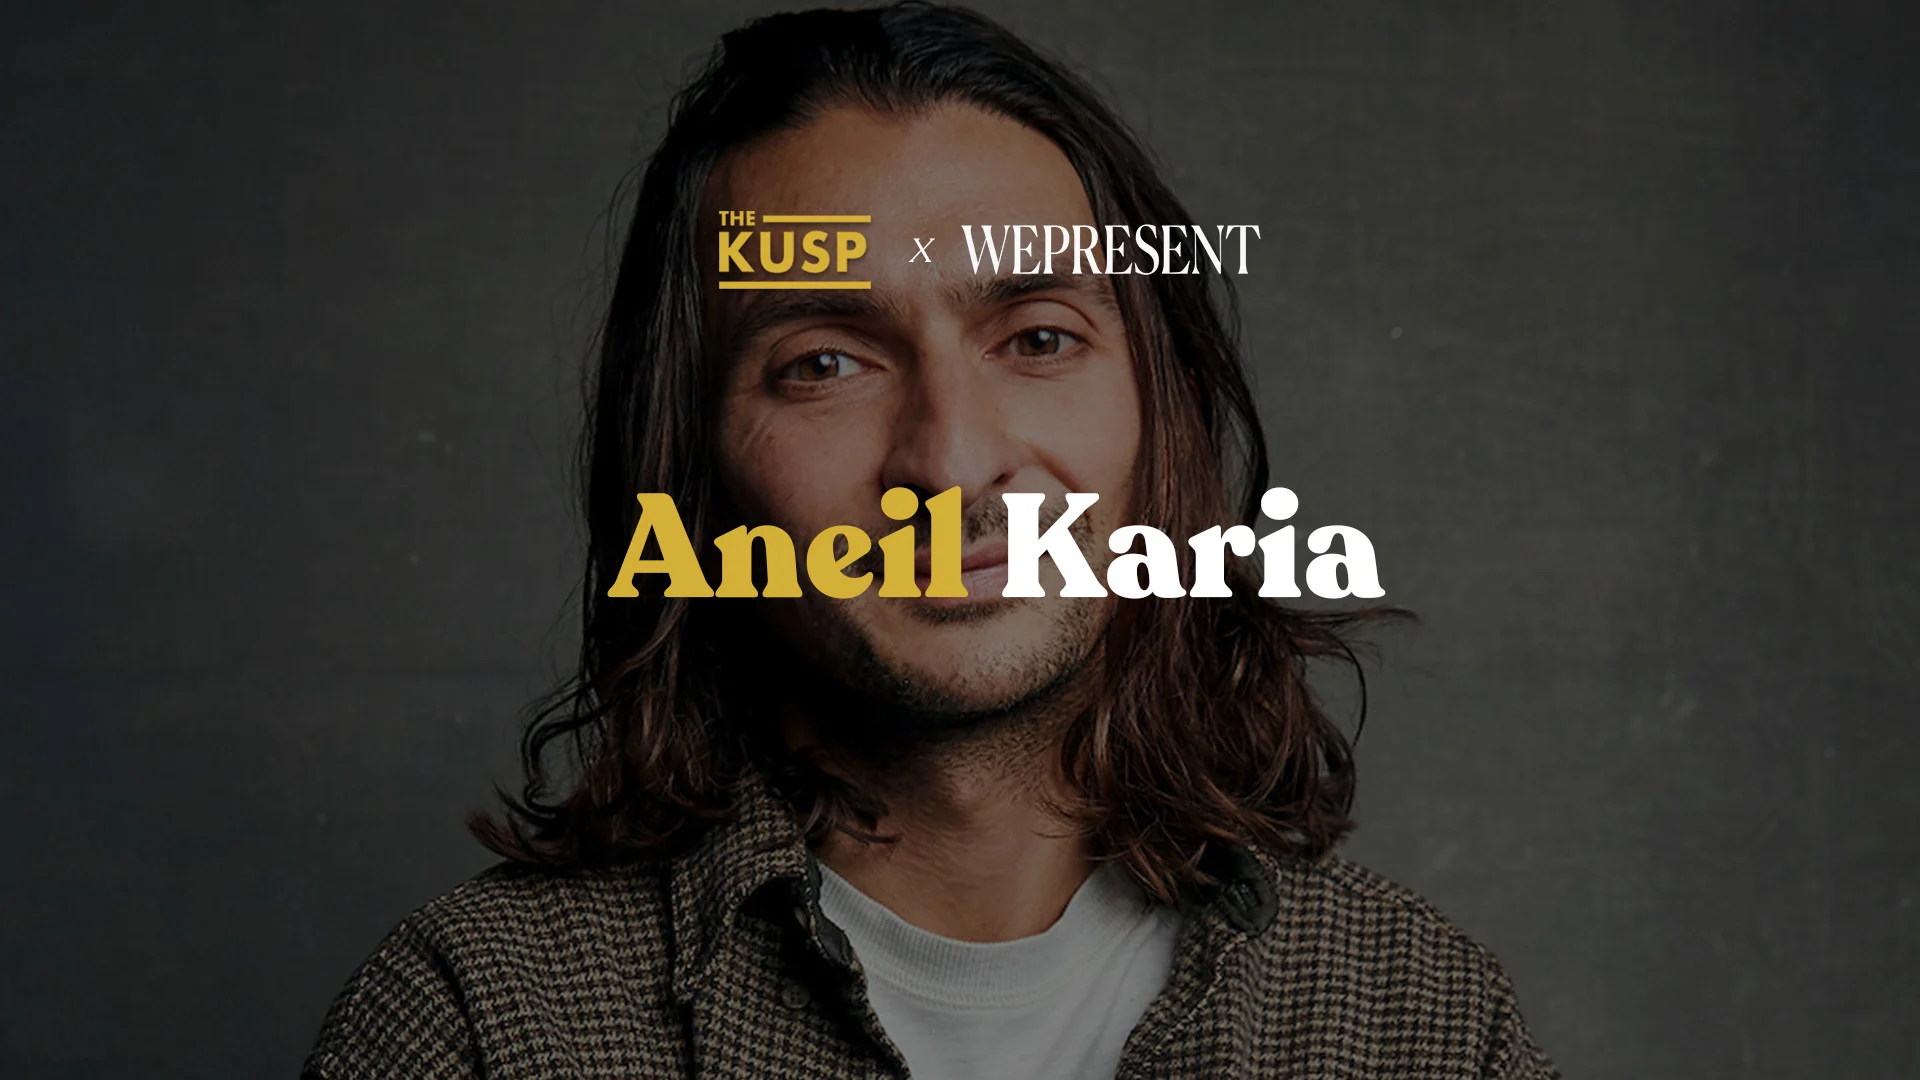 Cover Image - The Kusp x Aneil Karia - Event